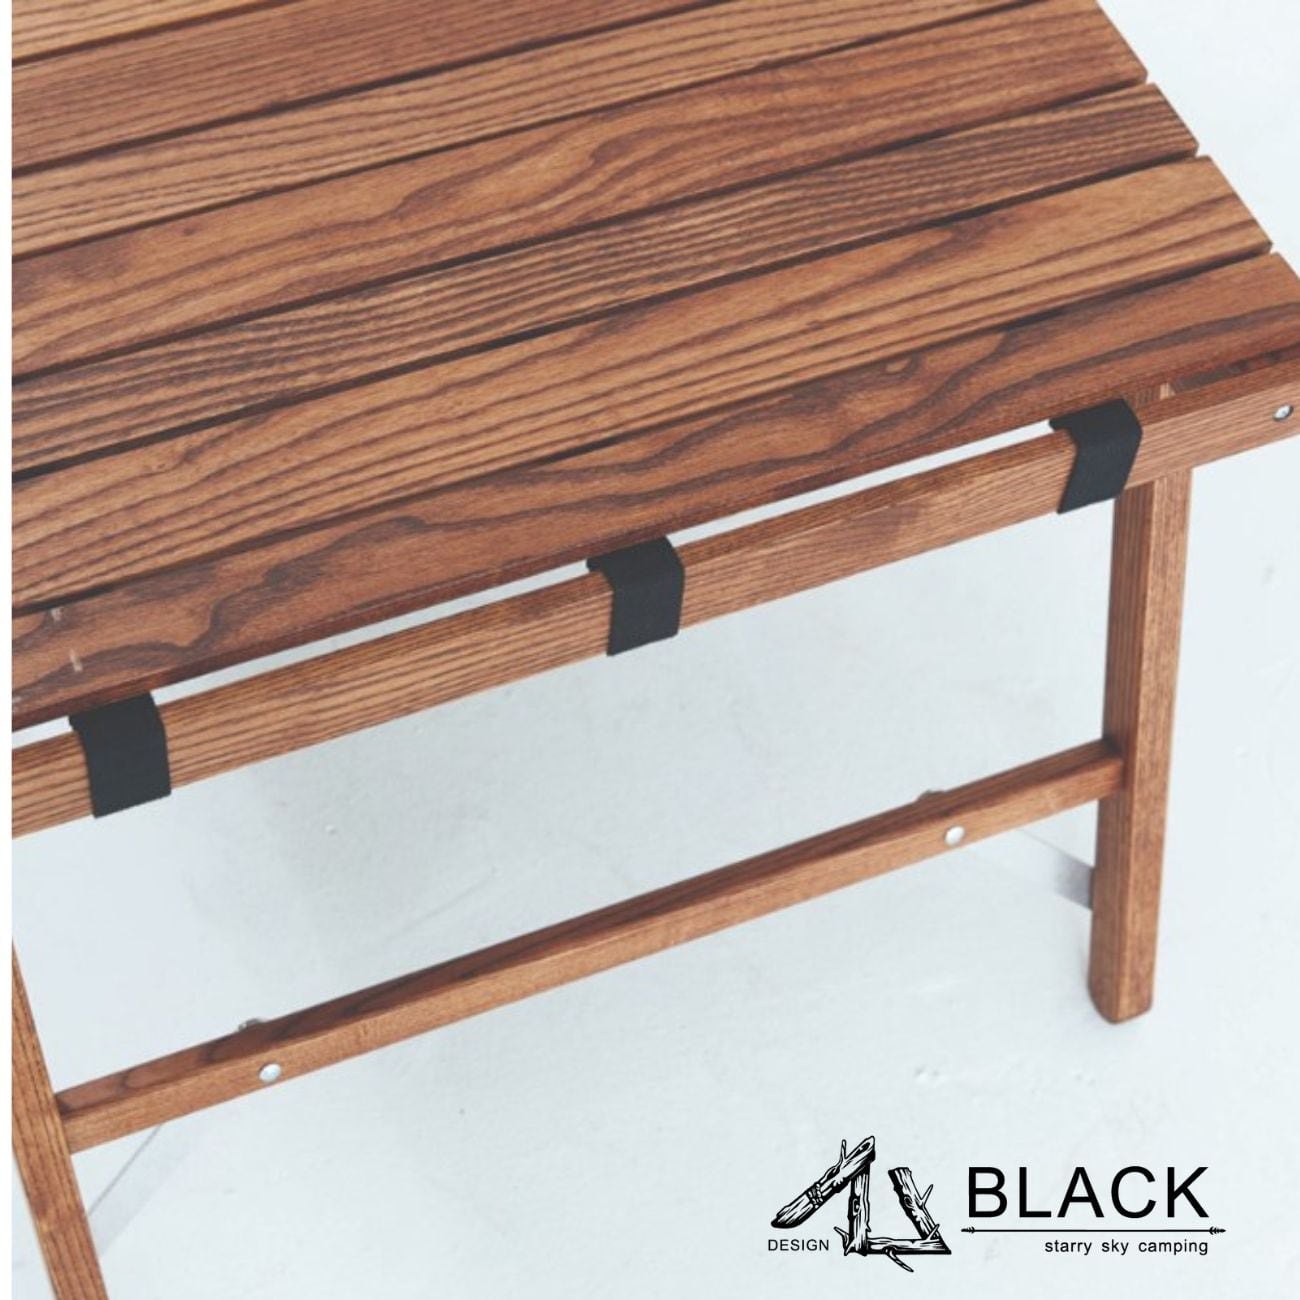 BLACK DESIGN ブラックデザイン スリムロールテーブル/キャンプロール